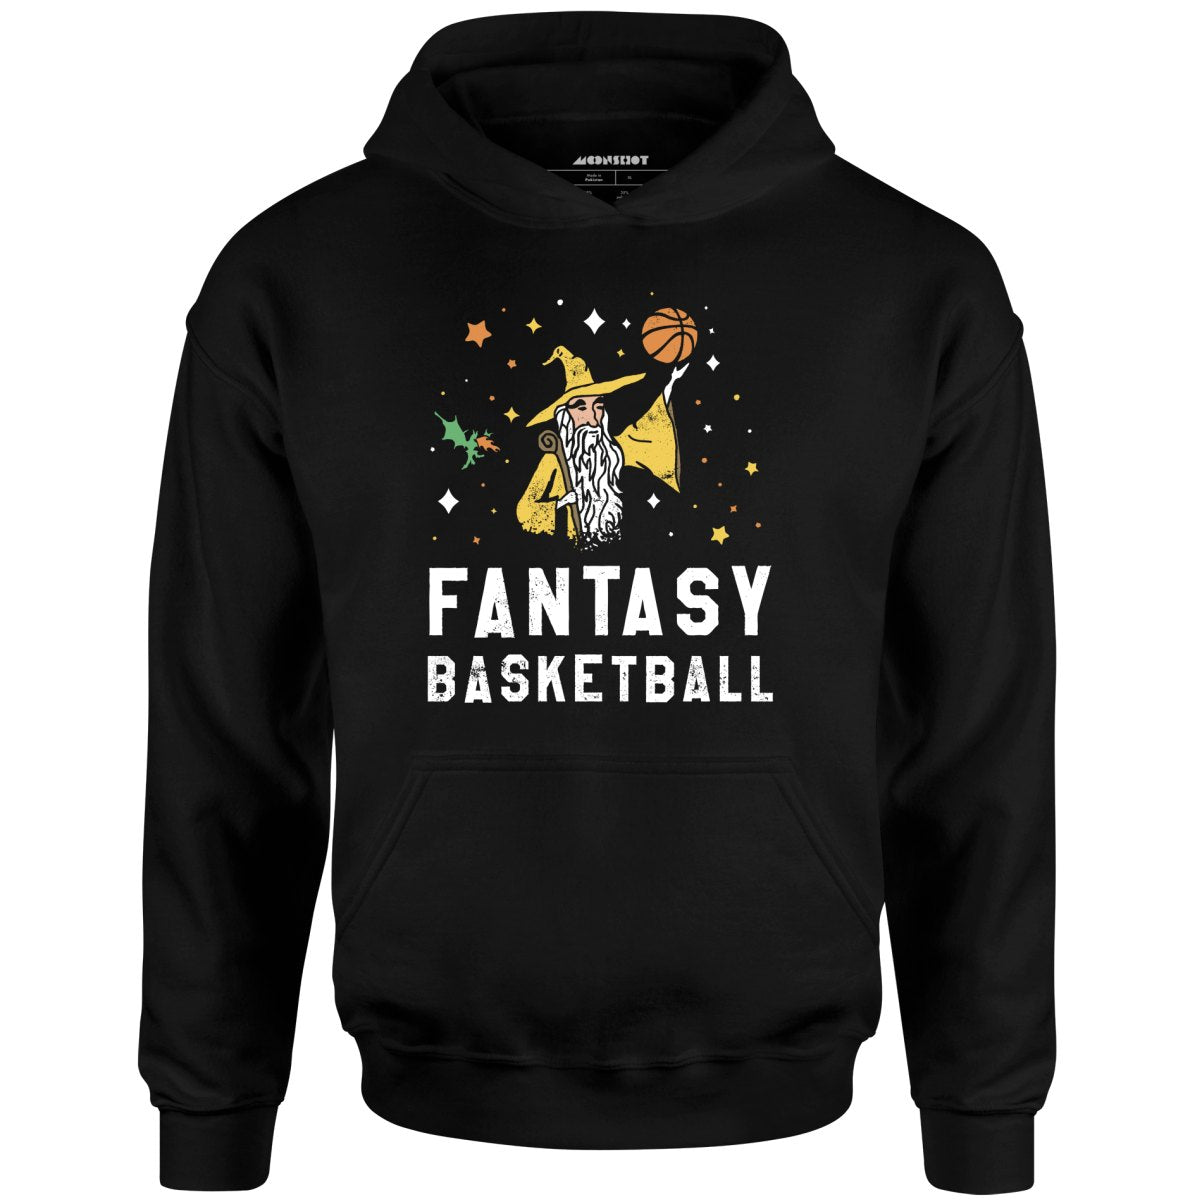 Fantasy Basketball - Unisex Hoodie